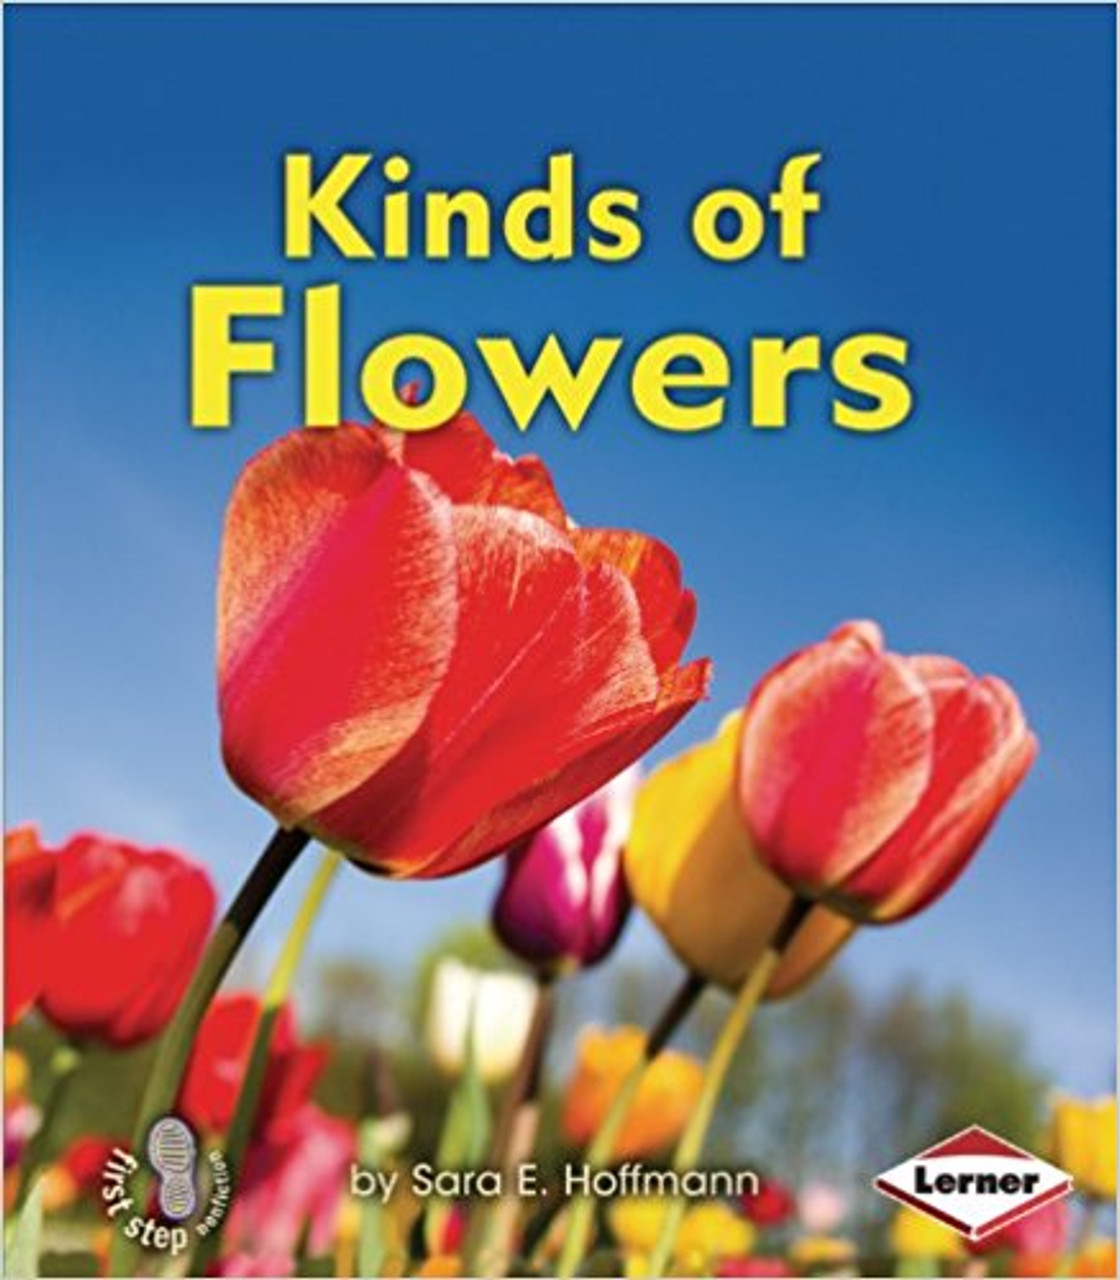 Kinds of Flowers by Sara E Hoffmann